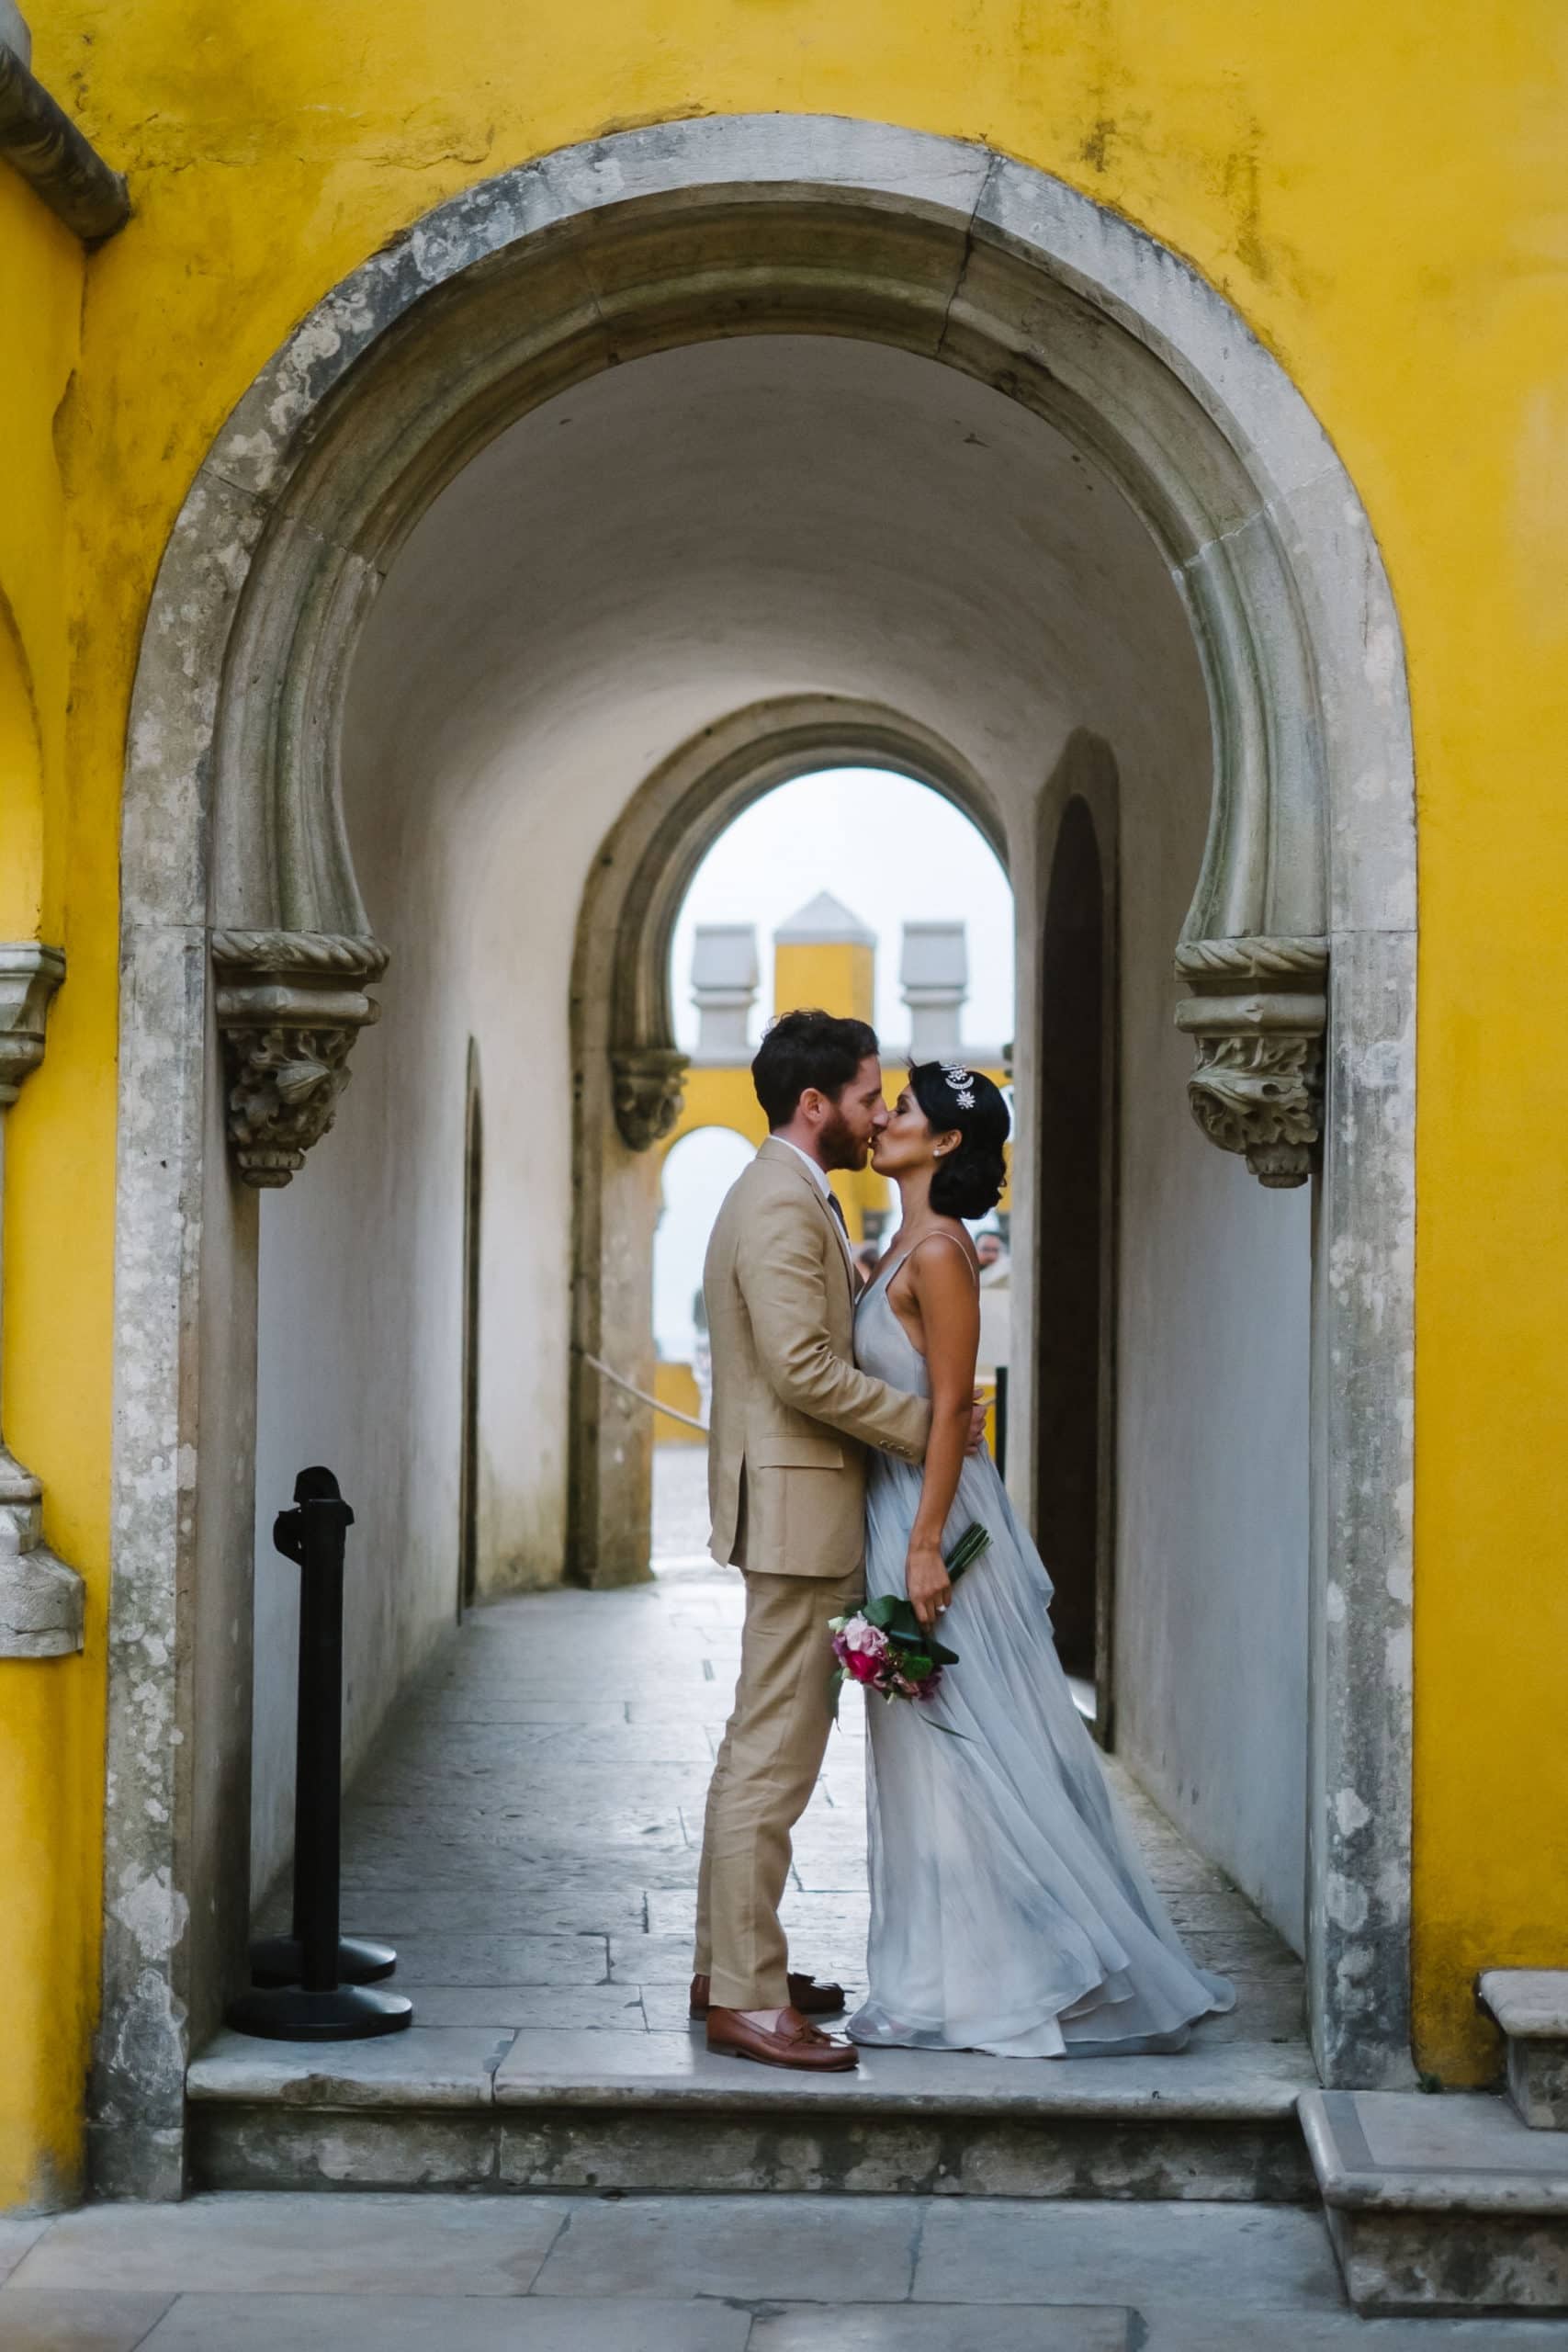 different wedding dress and bohemian style #bohemian #portugalelopement #LeanneMarshall #sintra #sintrawedding